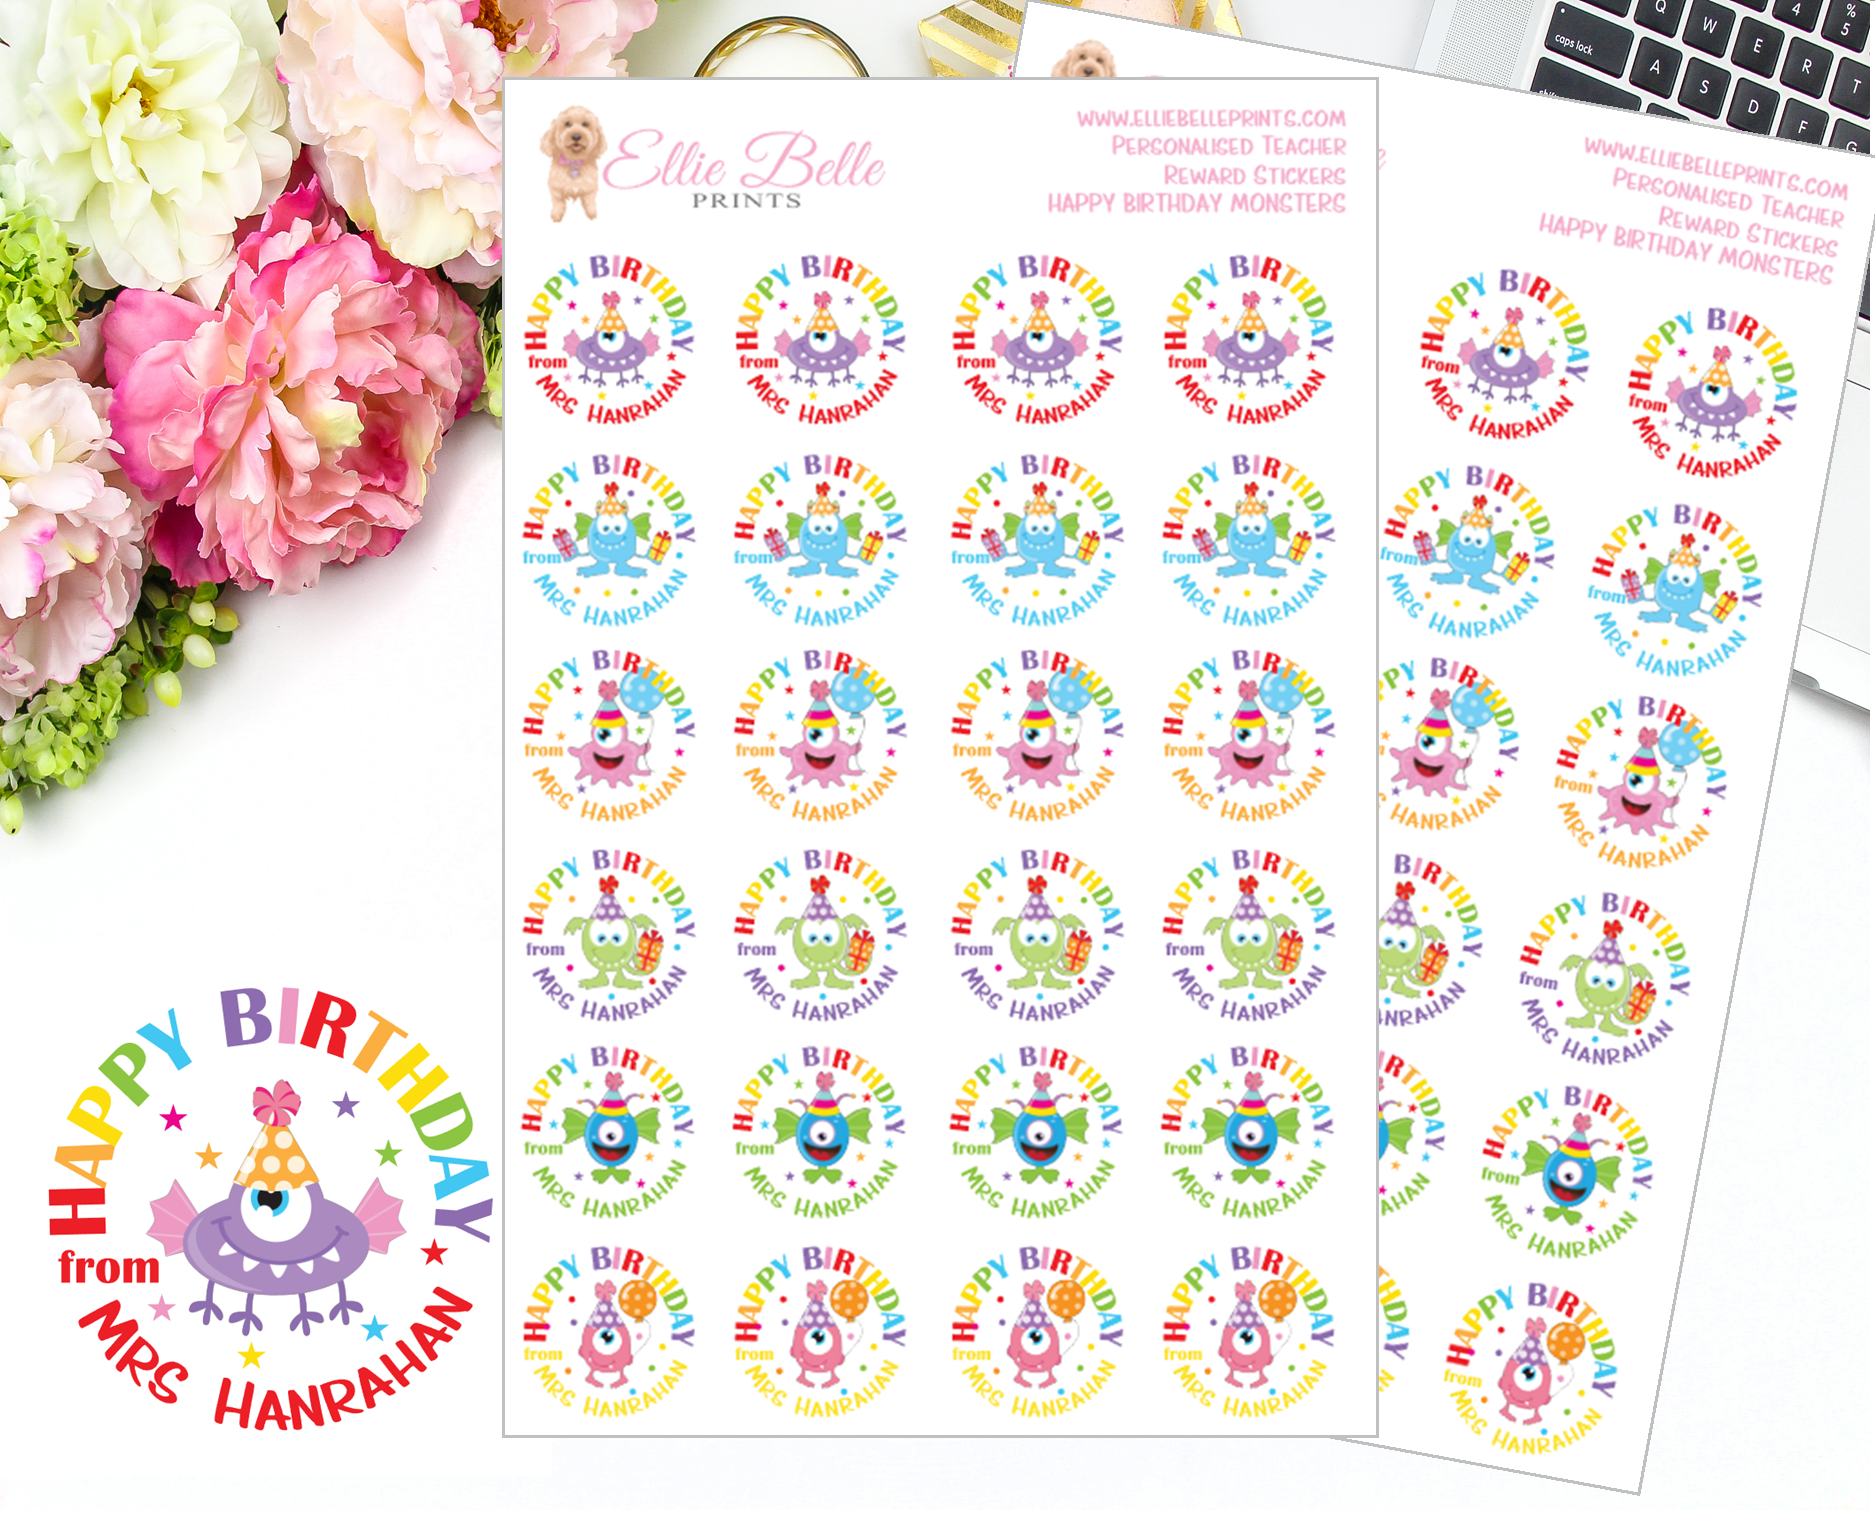 Happy Birthday - Personalised Teacher Reward Stickers